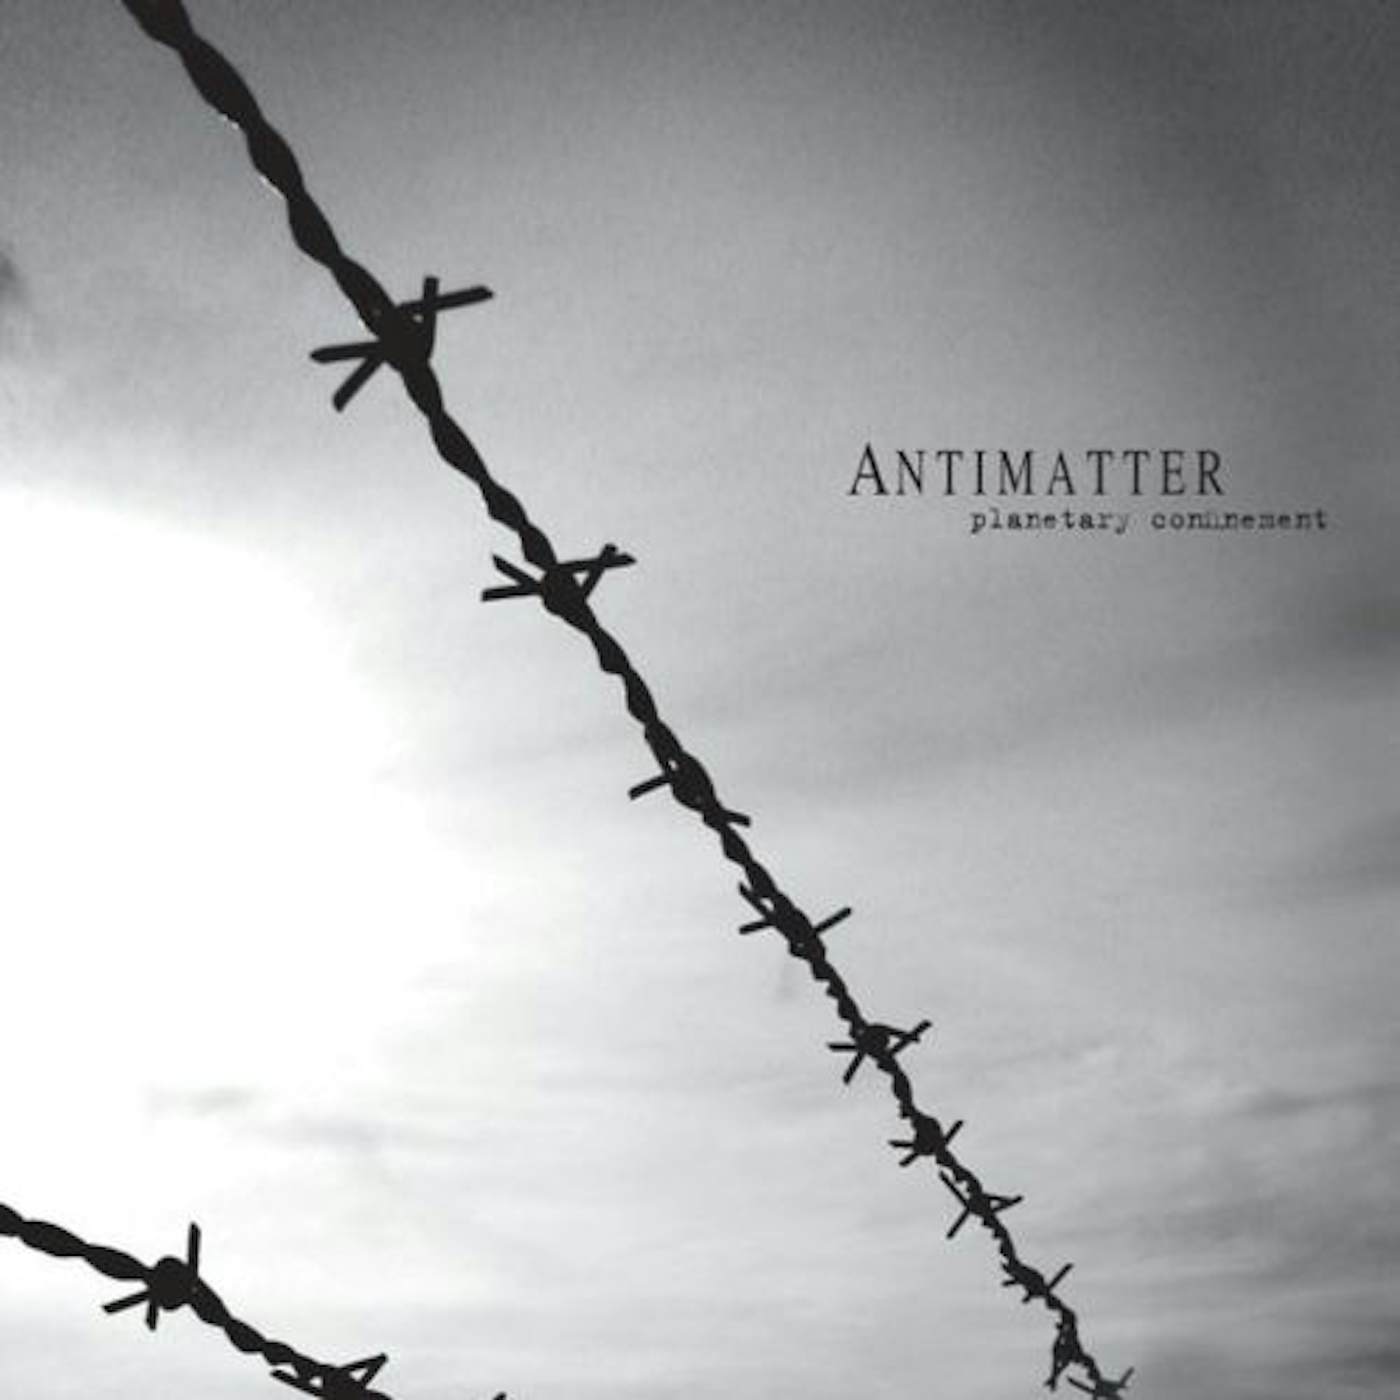 Antimatter Planetary Confinement Vinyl Record